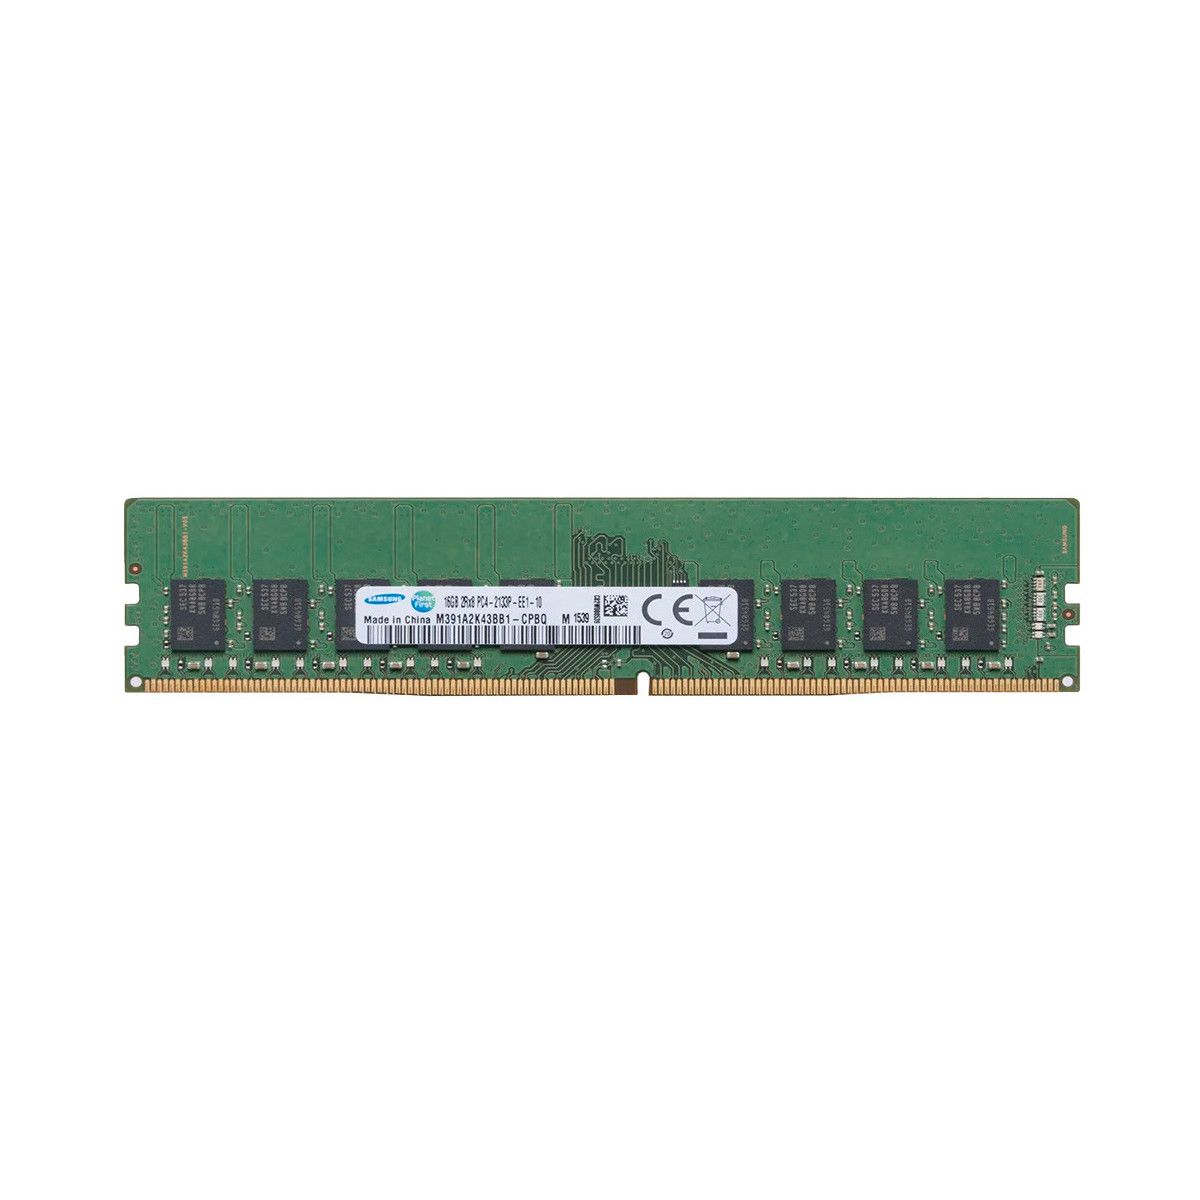 4X70M41718-MS - Memstar 1x 16GB DDR4-2133 ECC UDIMM PC4-17000P-E - Mem-Star Kompatybilna pamięć OEM 1 - Memstar 